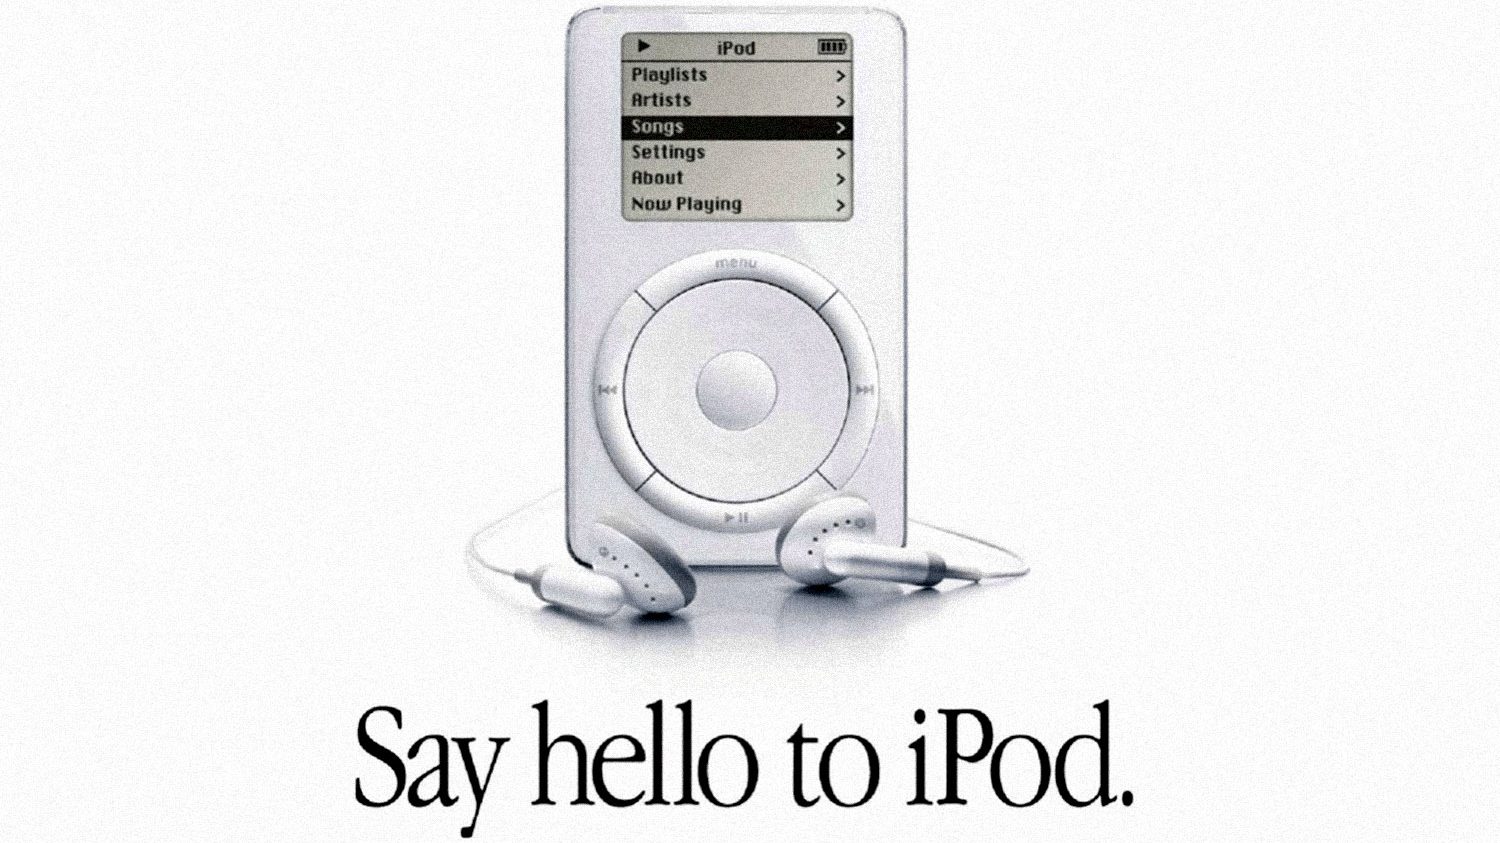 say hello to iPod ad